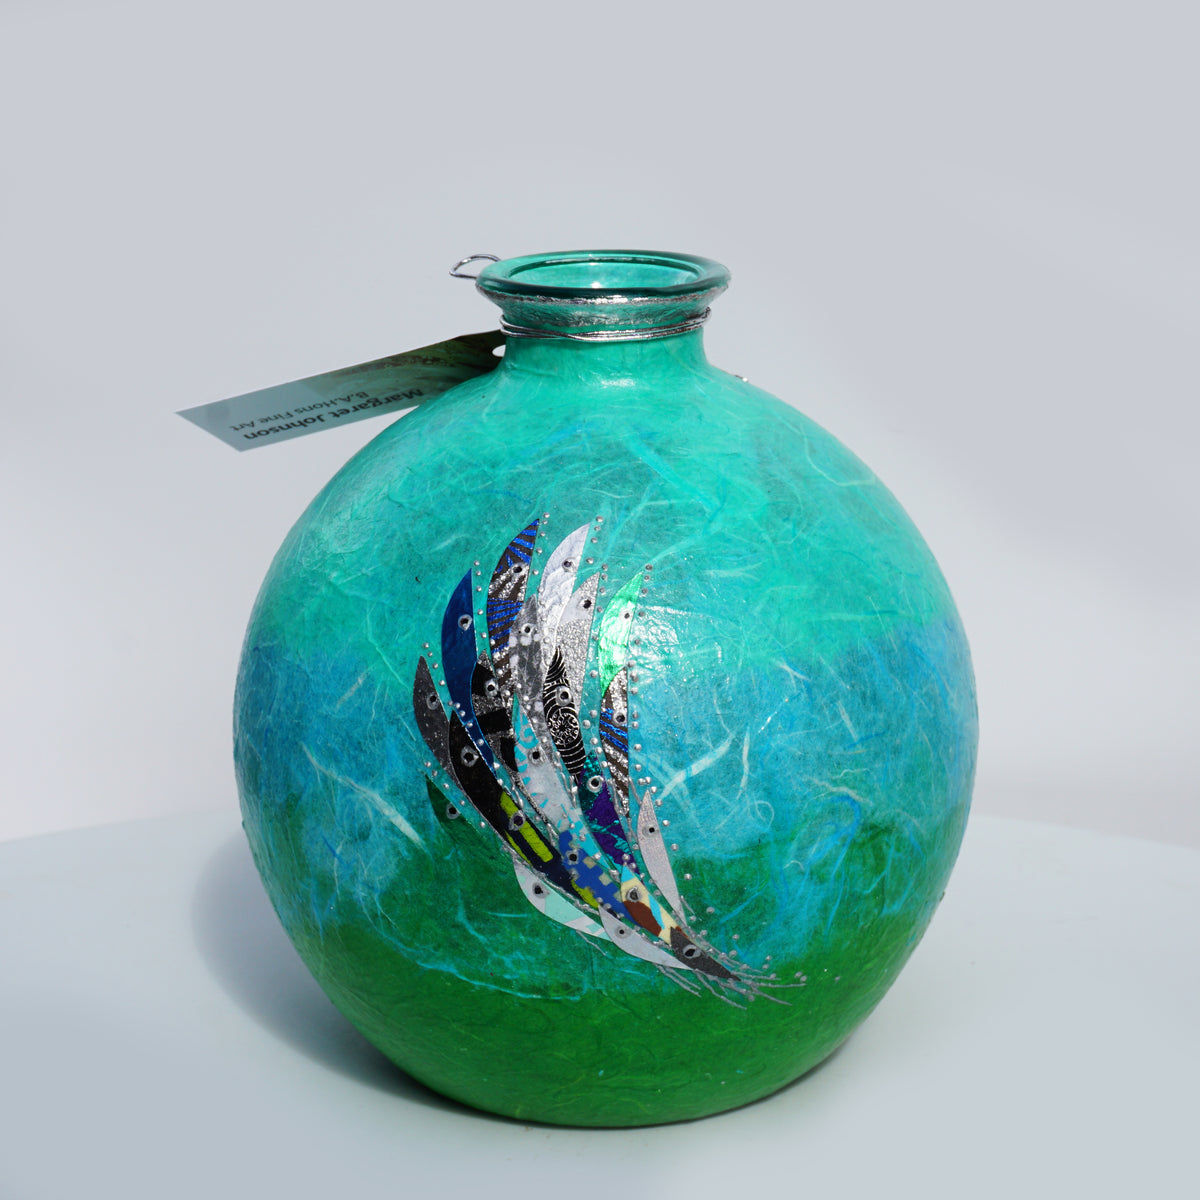 Orb Vase - Green & Silver